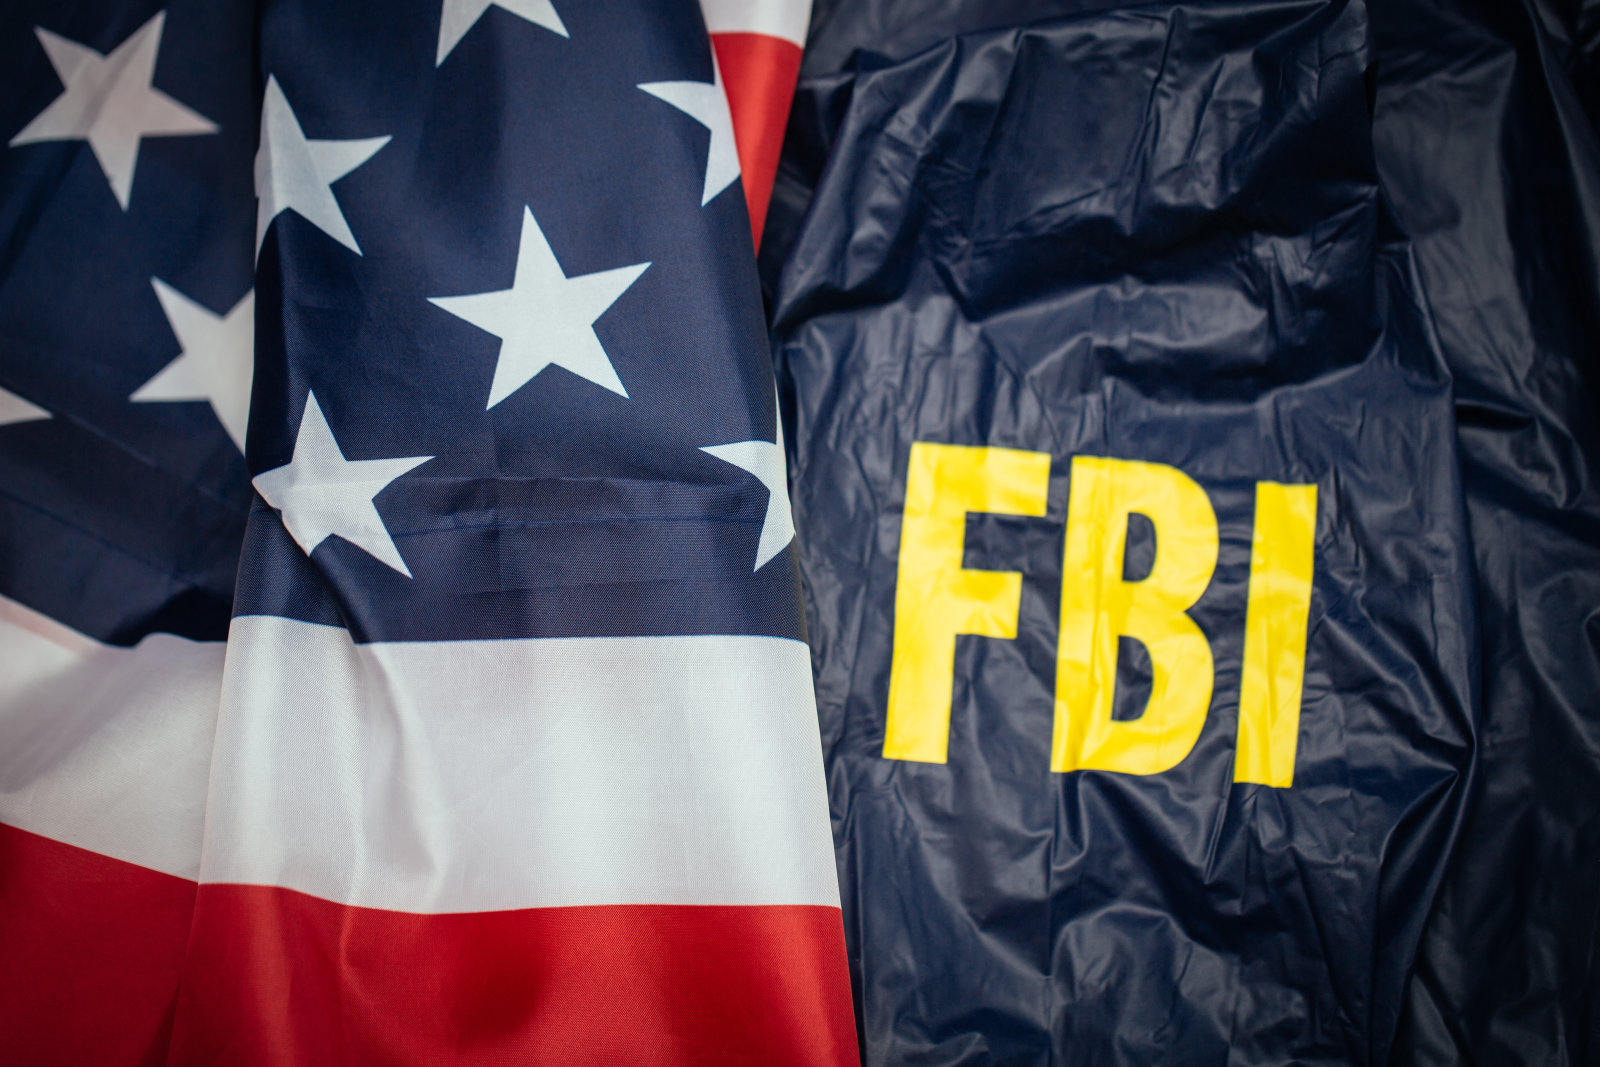 FBI Initiated 3 Probes seeking into Russian Hacking in the U.S Election